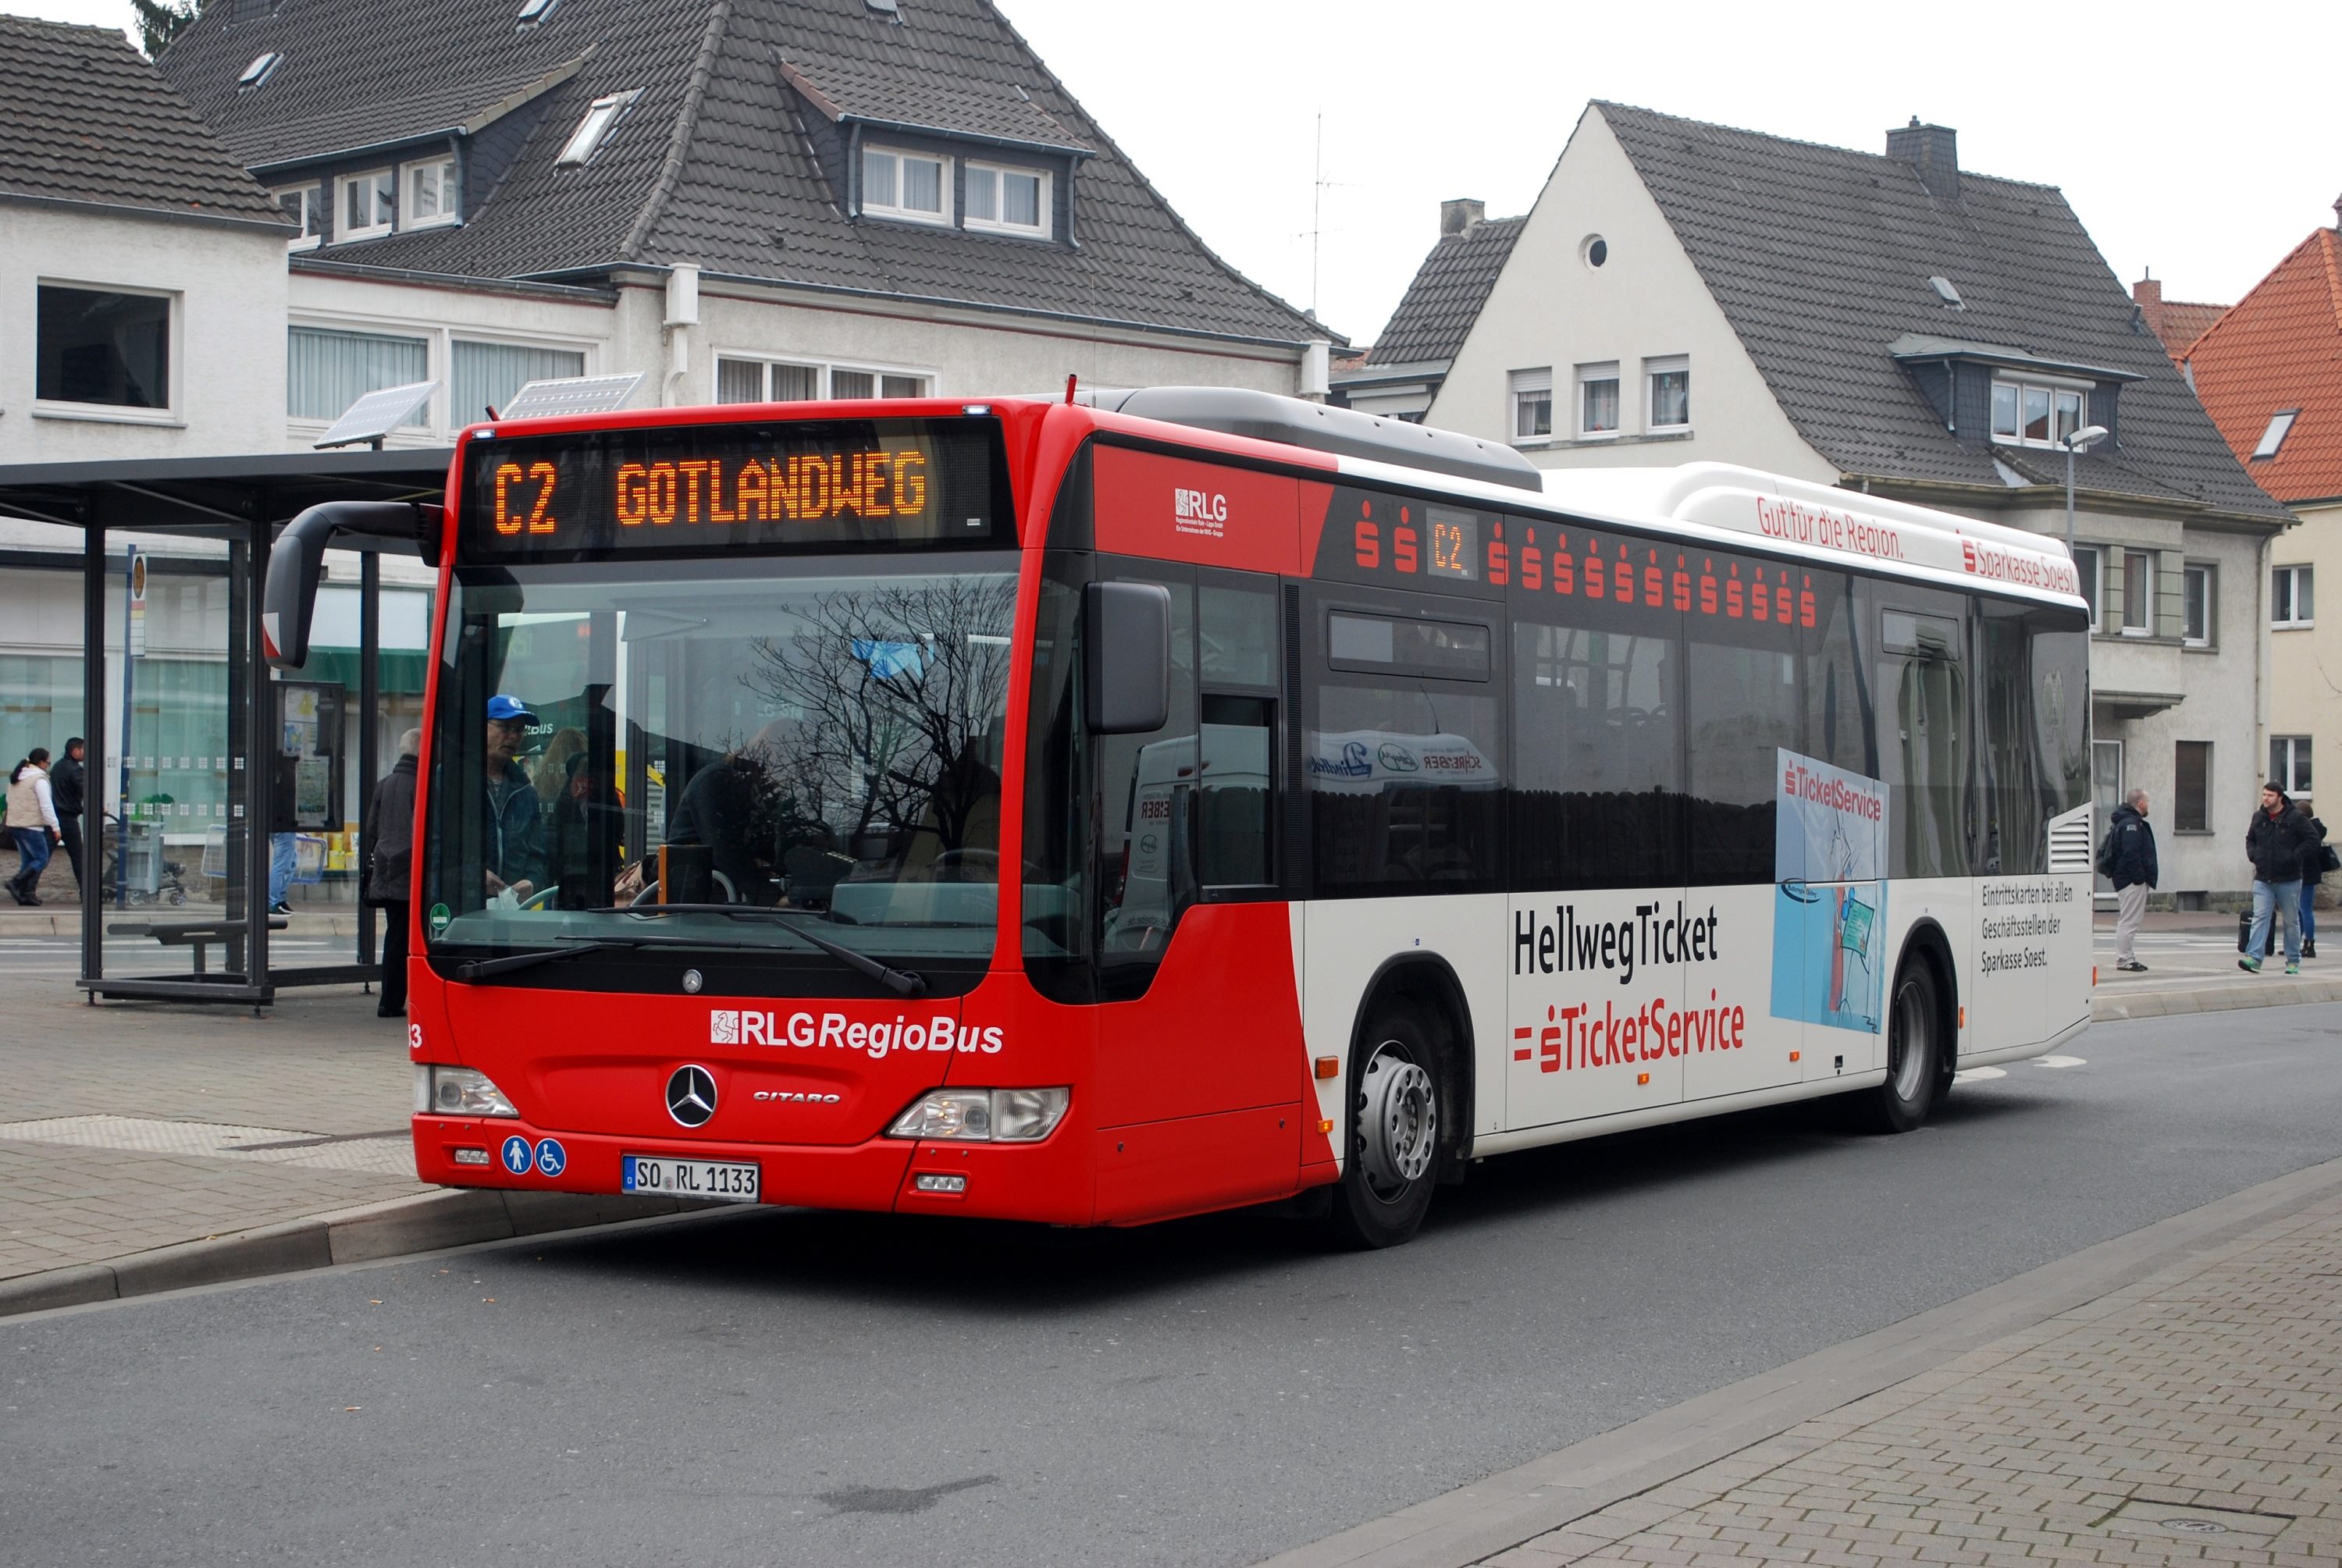 C2 SO-Gotlandweg SO-Bustreff/Hansaplatz